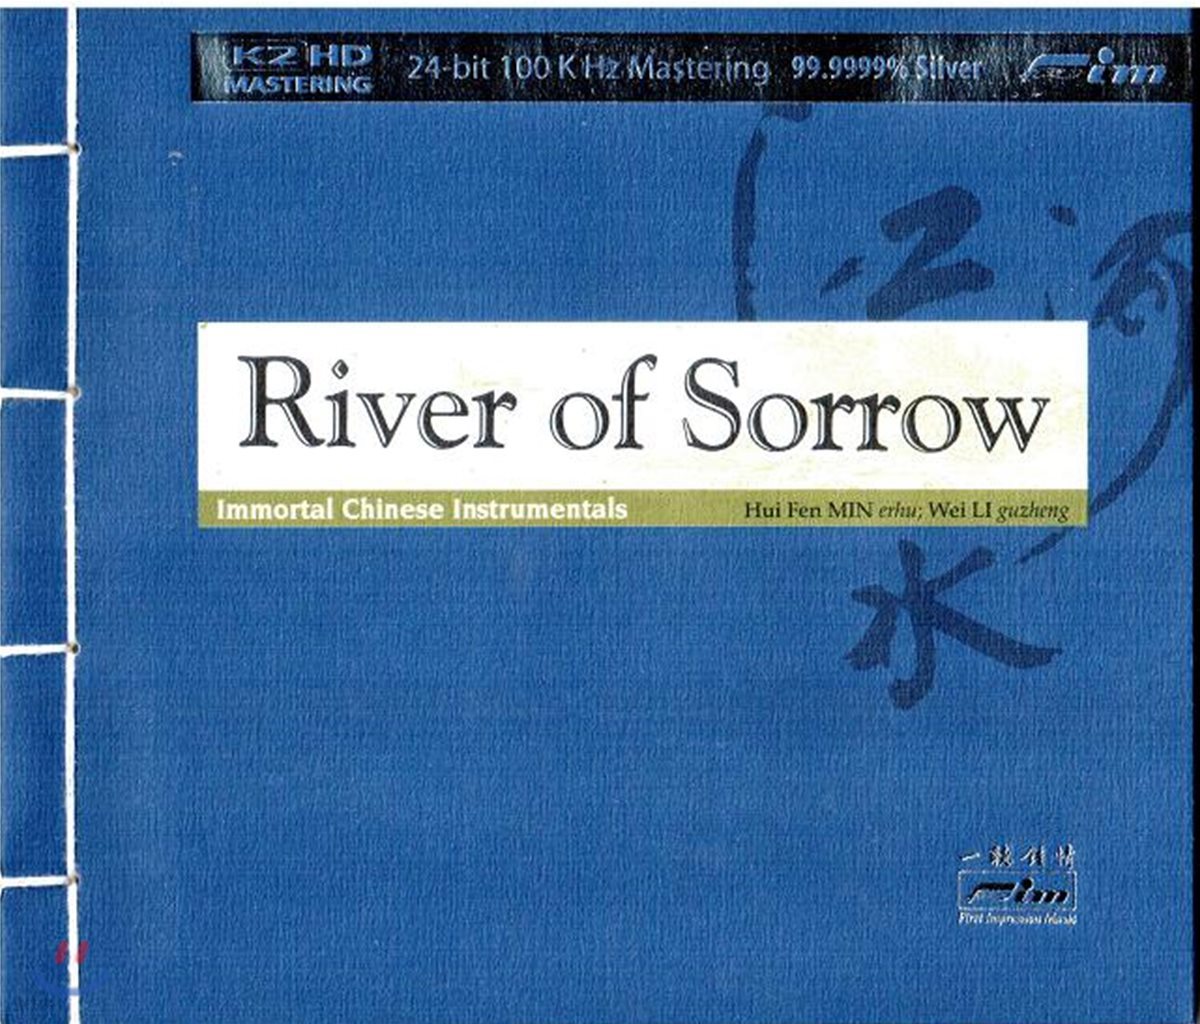 Hui Fen Min / Wei Li 중국 전통악기 고쟁과 얼후 연주집 - 슬픔의 강 (River Of Sorrow)